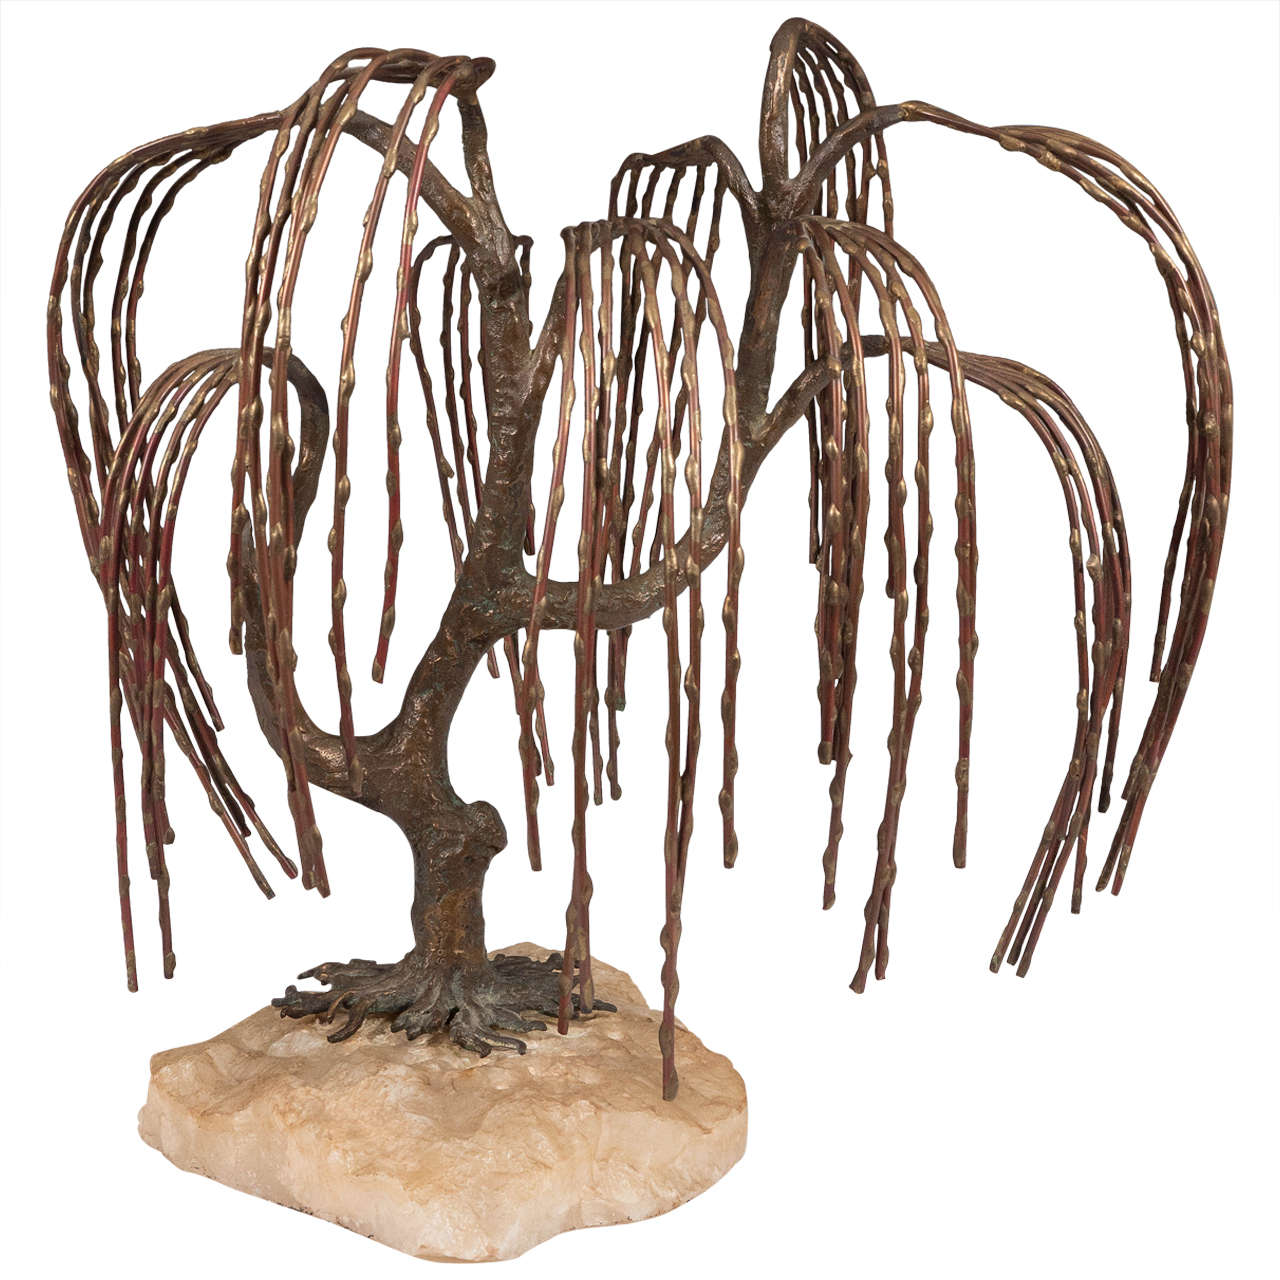 Brian Bijan Sculptural Weeping Willow in Mixed Metals